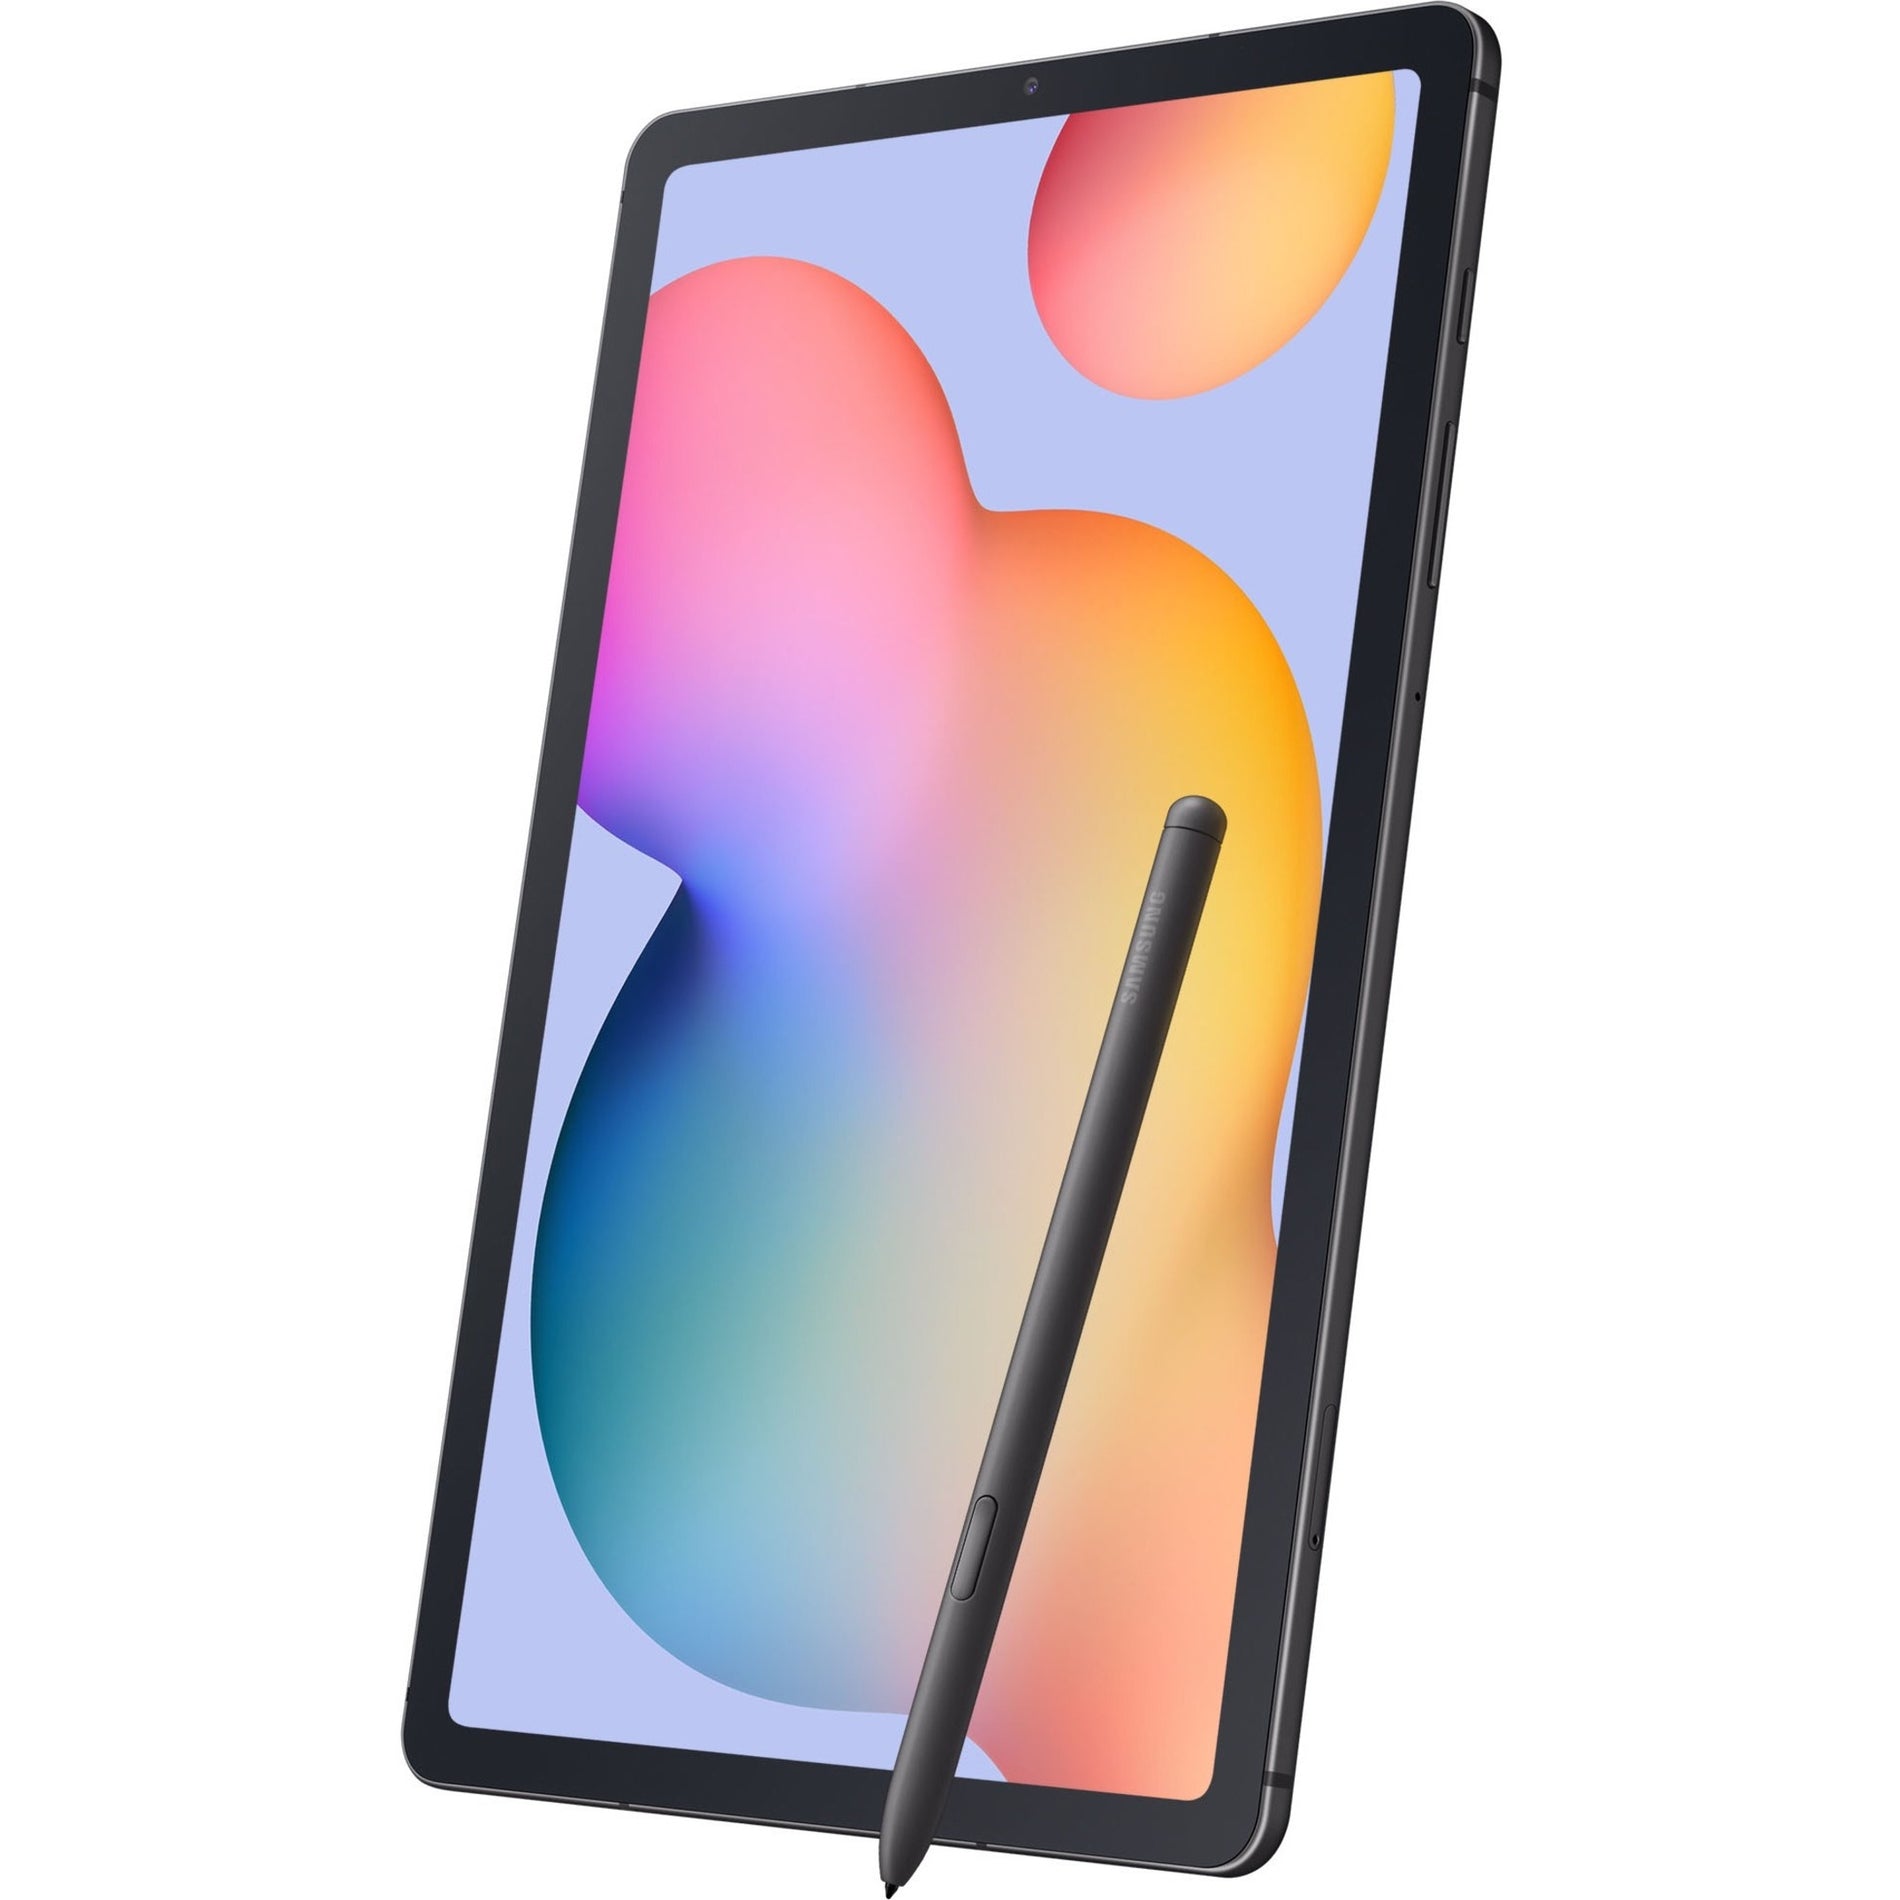 Samsung Galaxy Tab S6 Lite 10.4" Tablet - Oxford Gray [Discontinued]